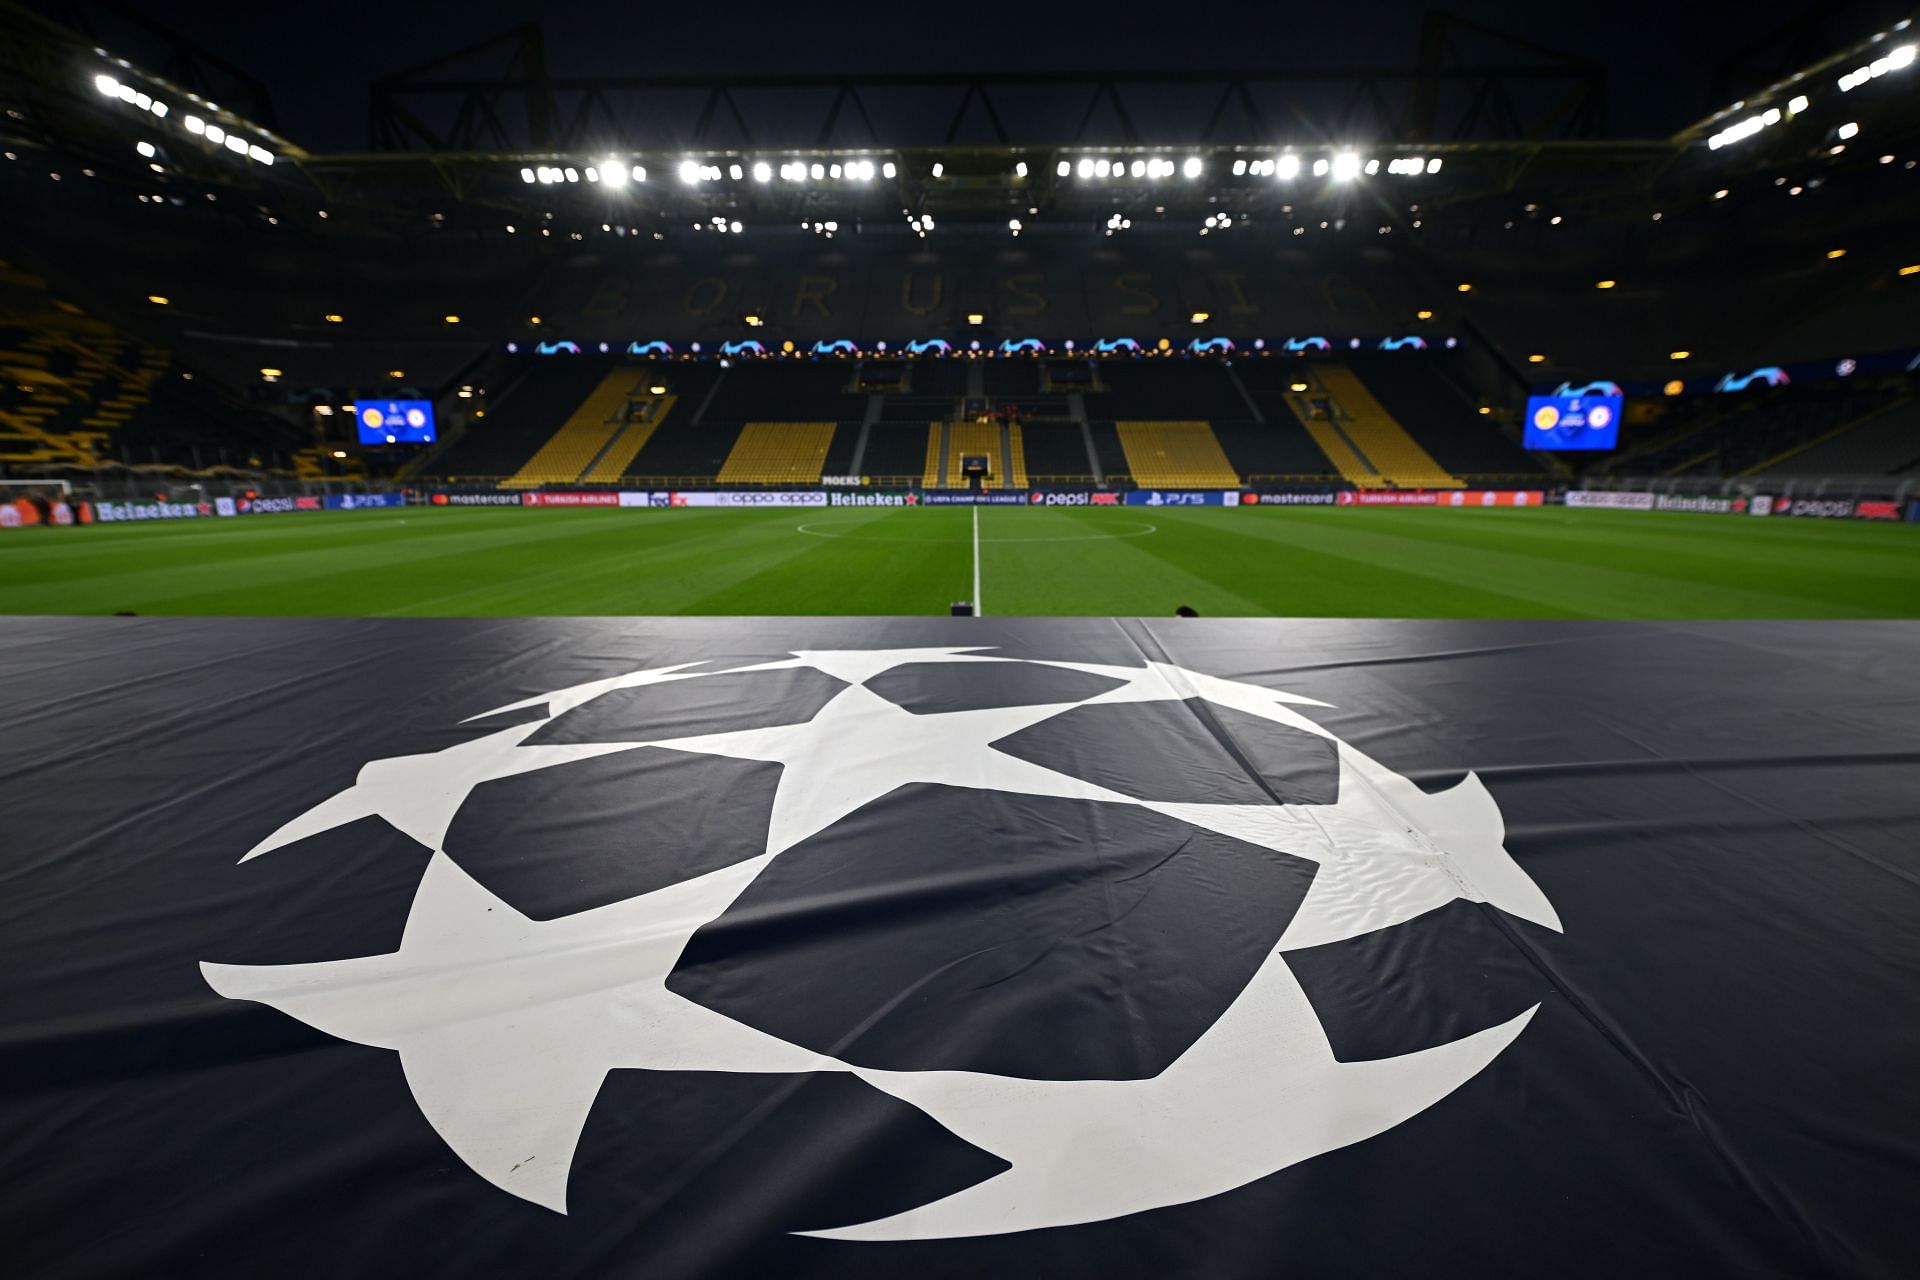 UEFA Champions League banner (via Getty Images)